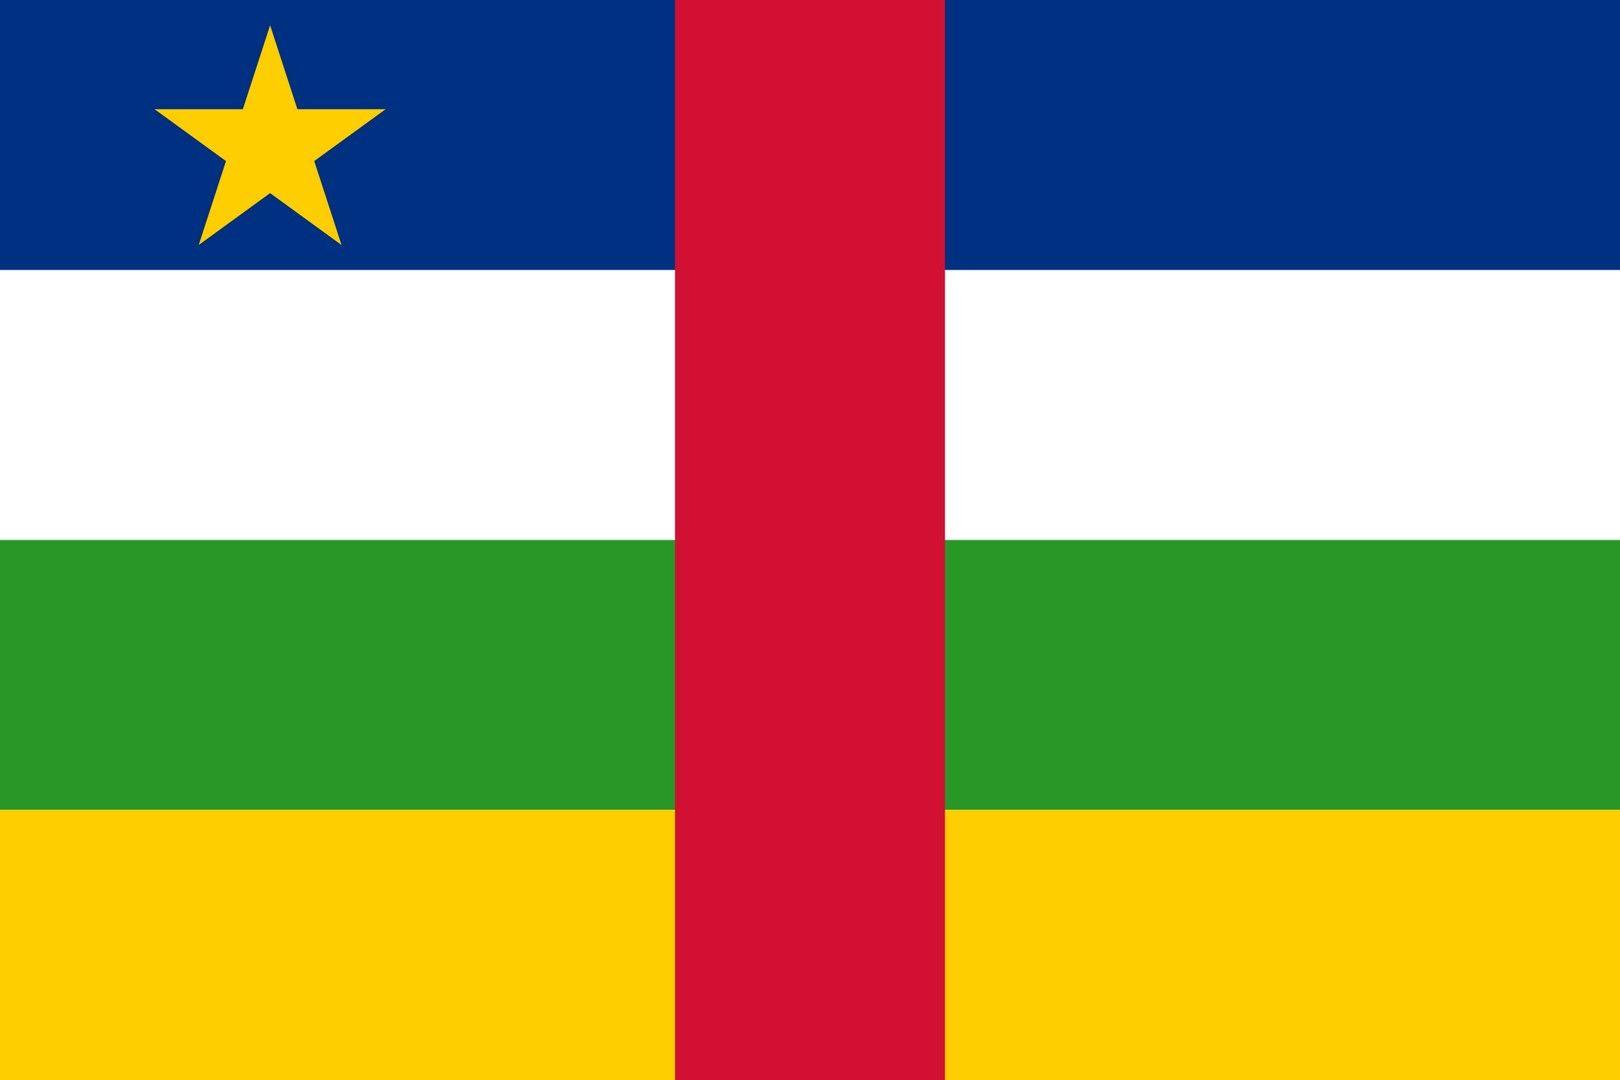 Central African Republic flag wallpaper. Flags wallpaper